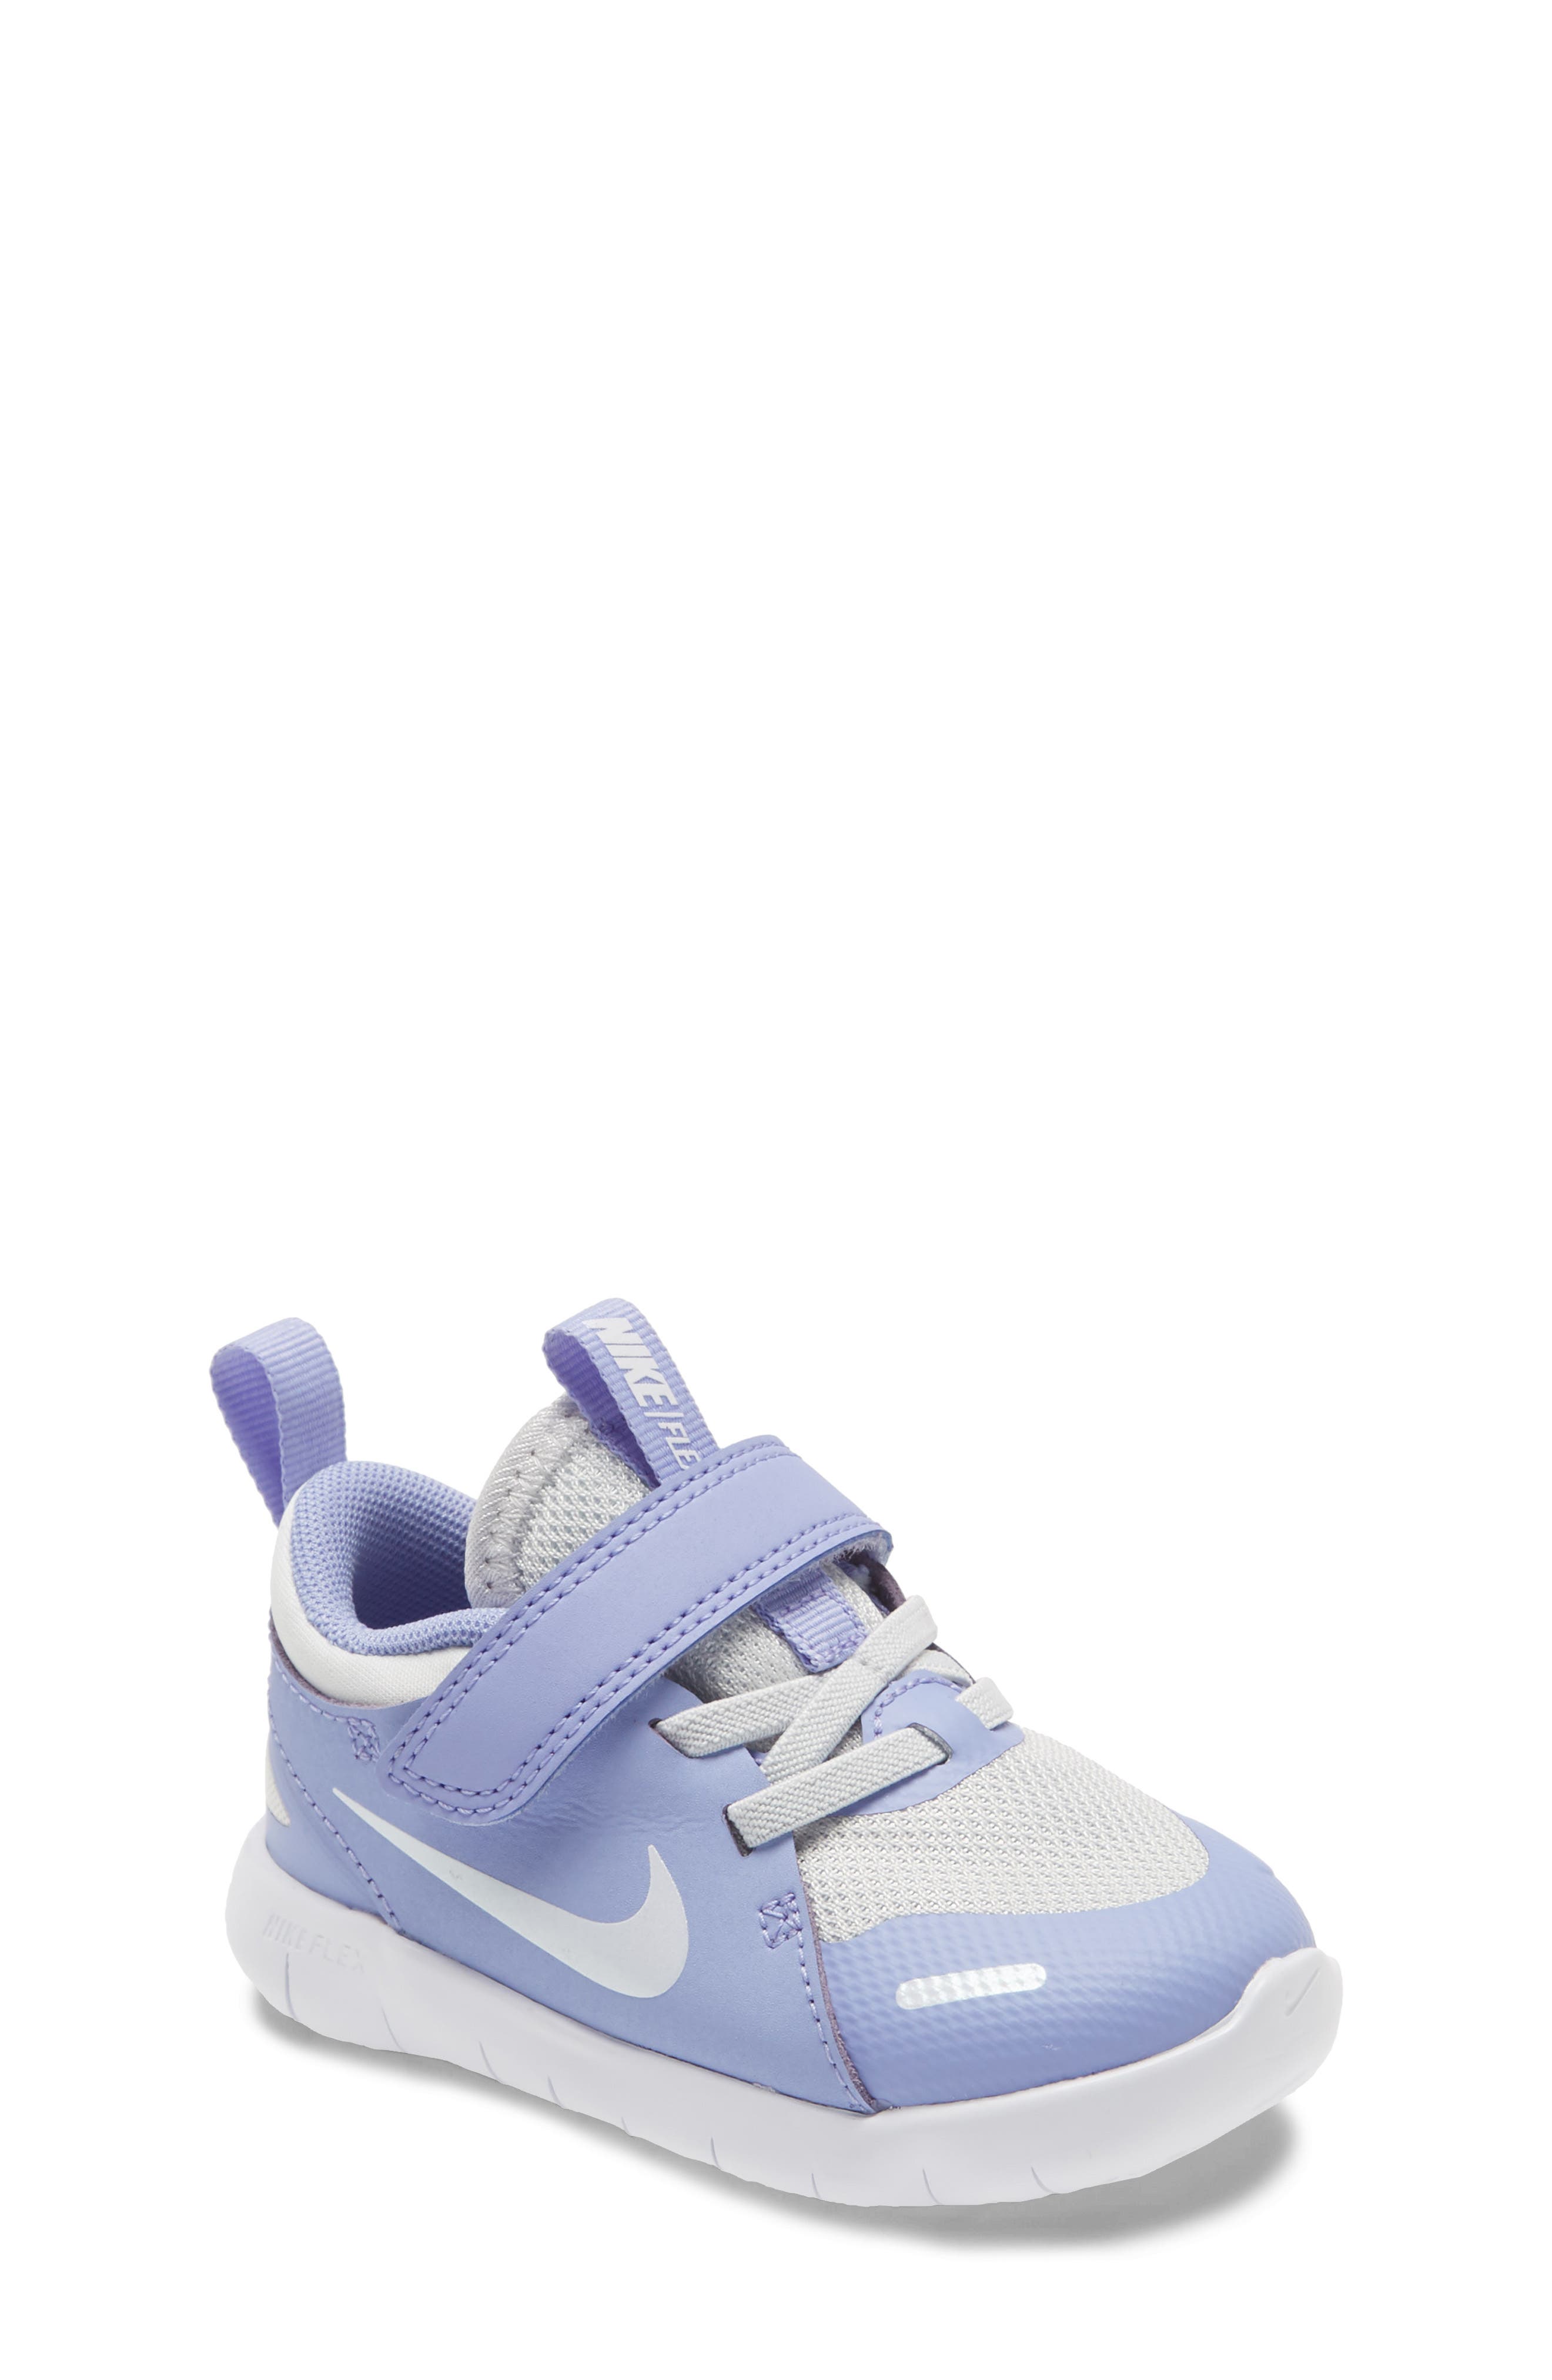 Baby Nike, Walker \u0026 Toddler Shoes 